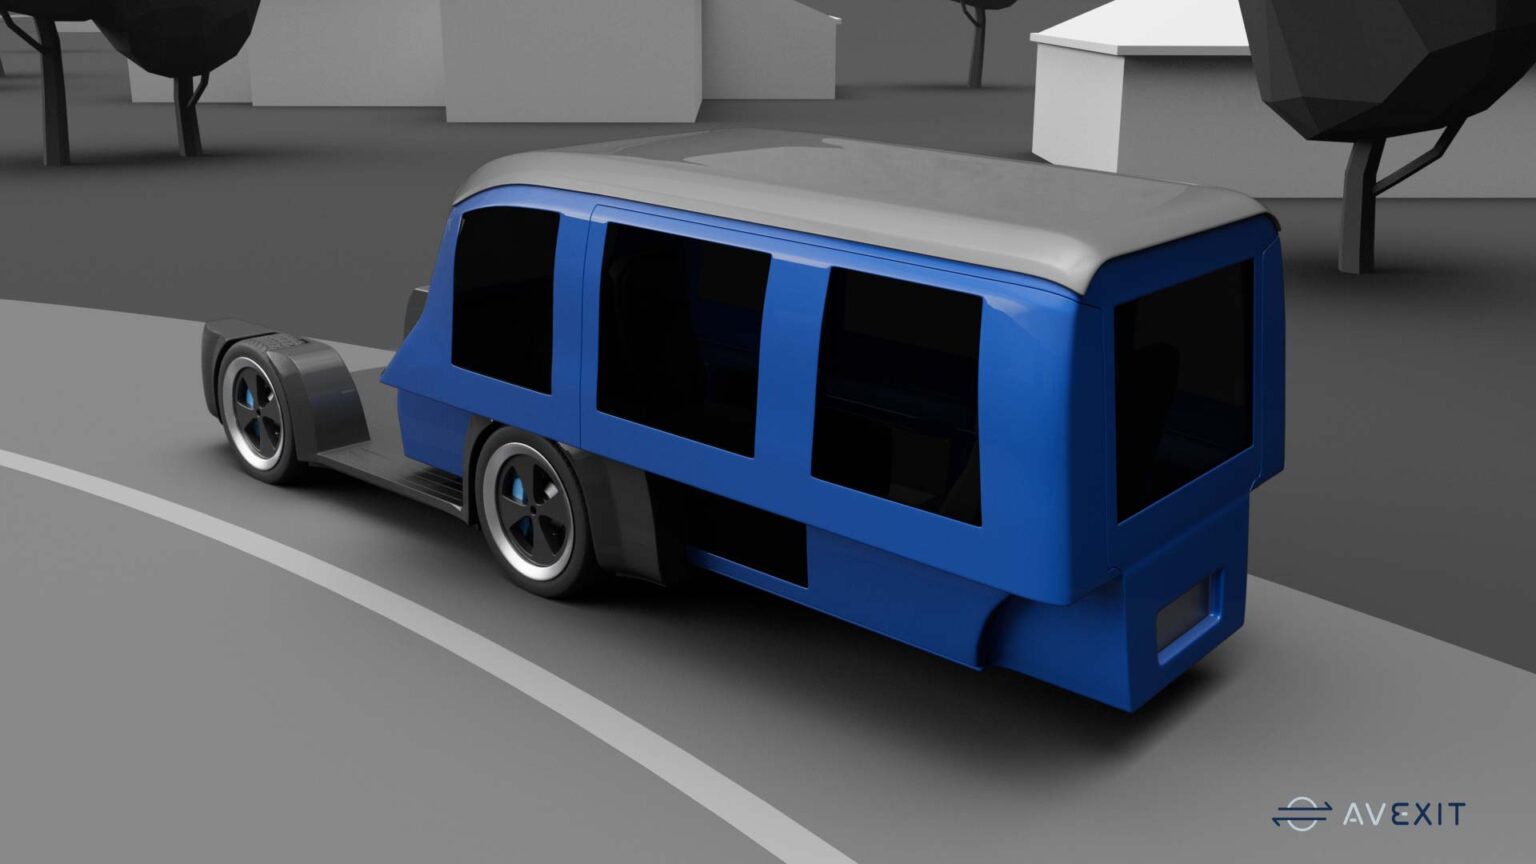 Generic AV model passenger pod mid-separation from powertrain, rear view